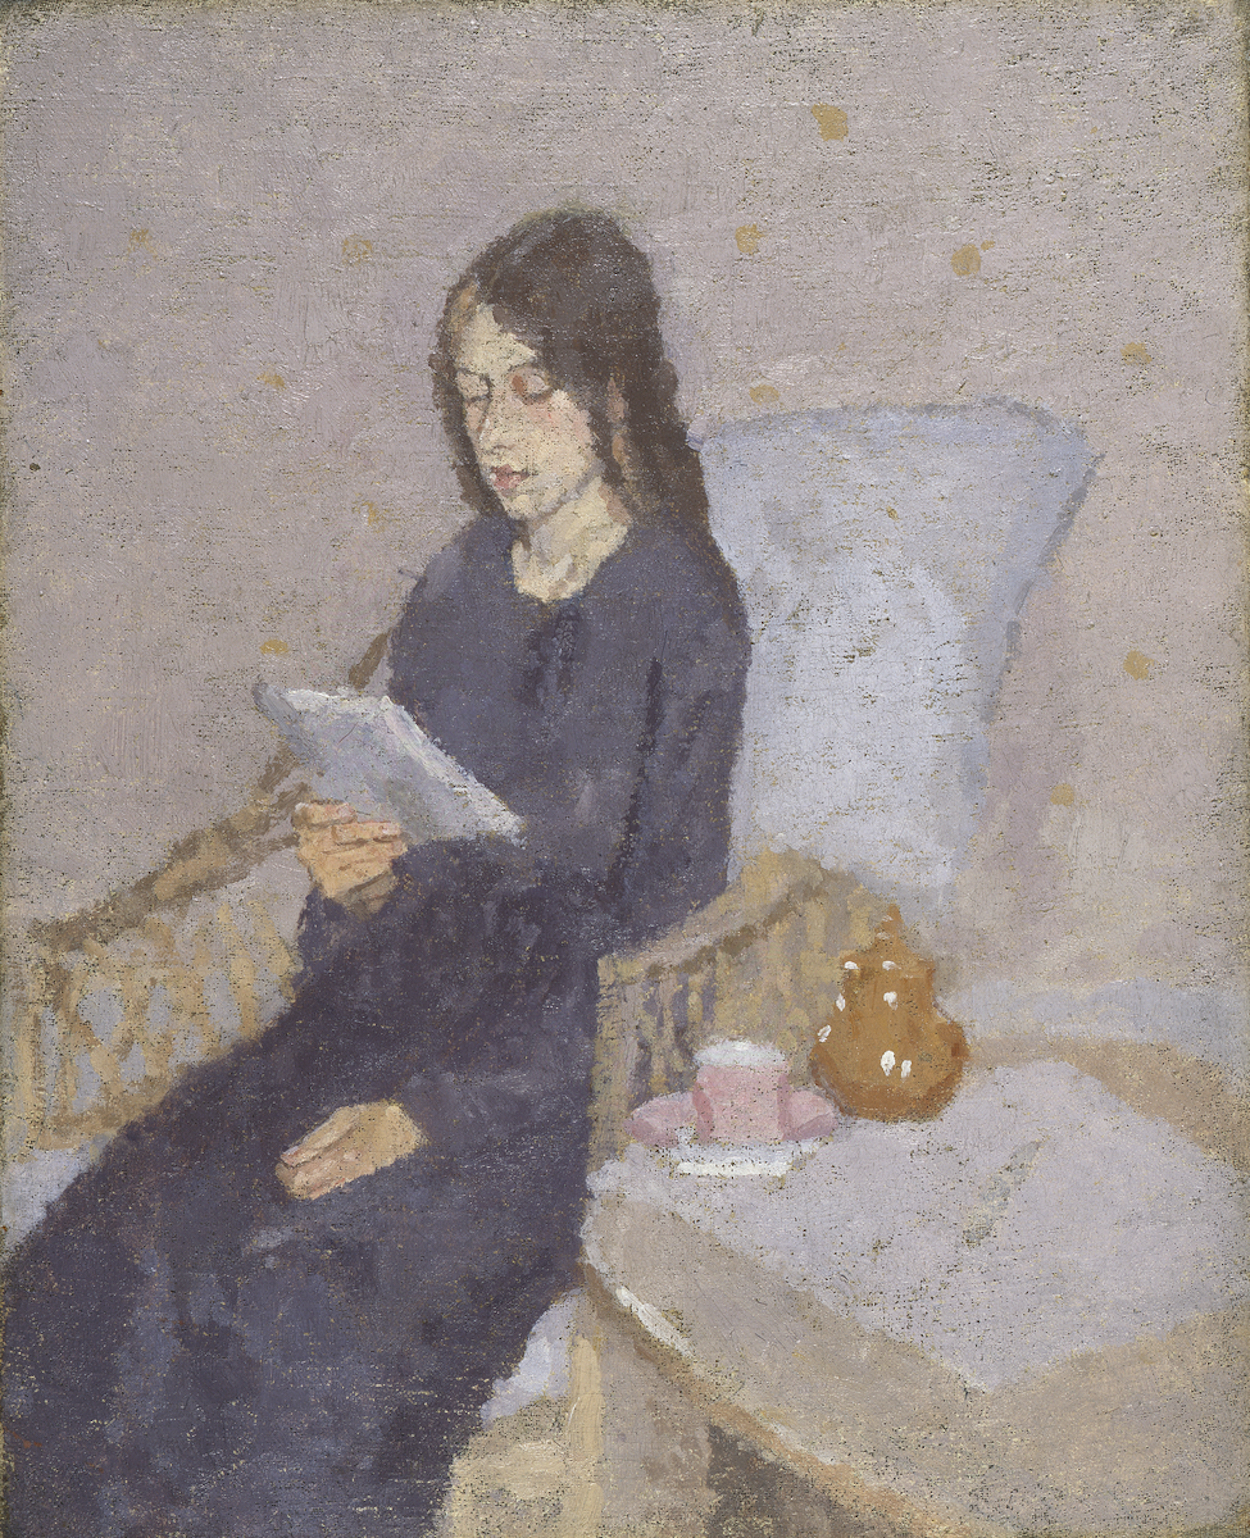 The Letter by Gwen John - 1924 - 41.1 x 33.2 cm Manchester Art Gallery